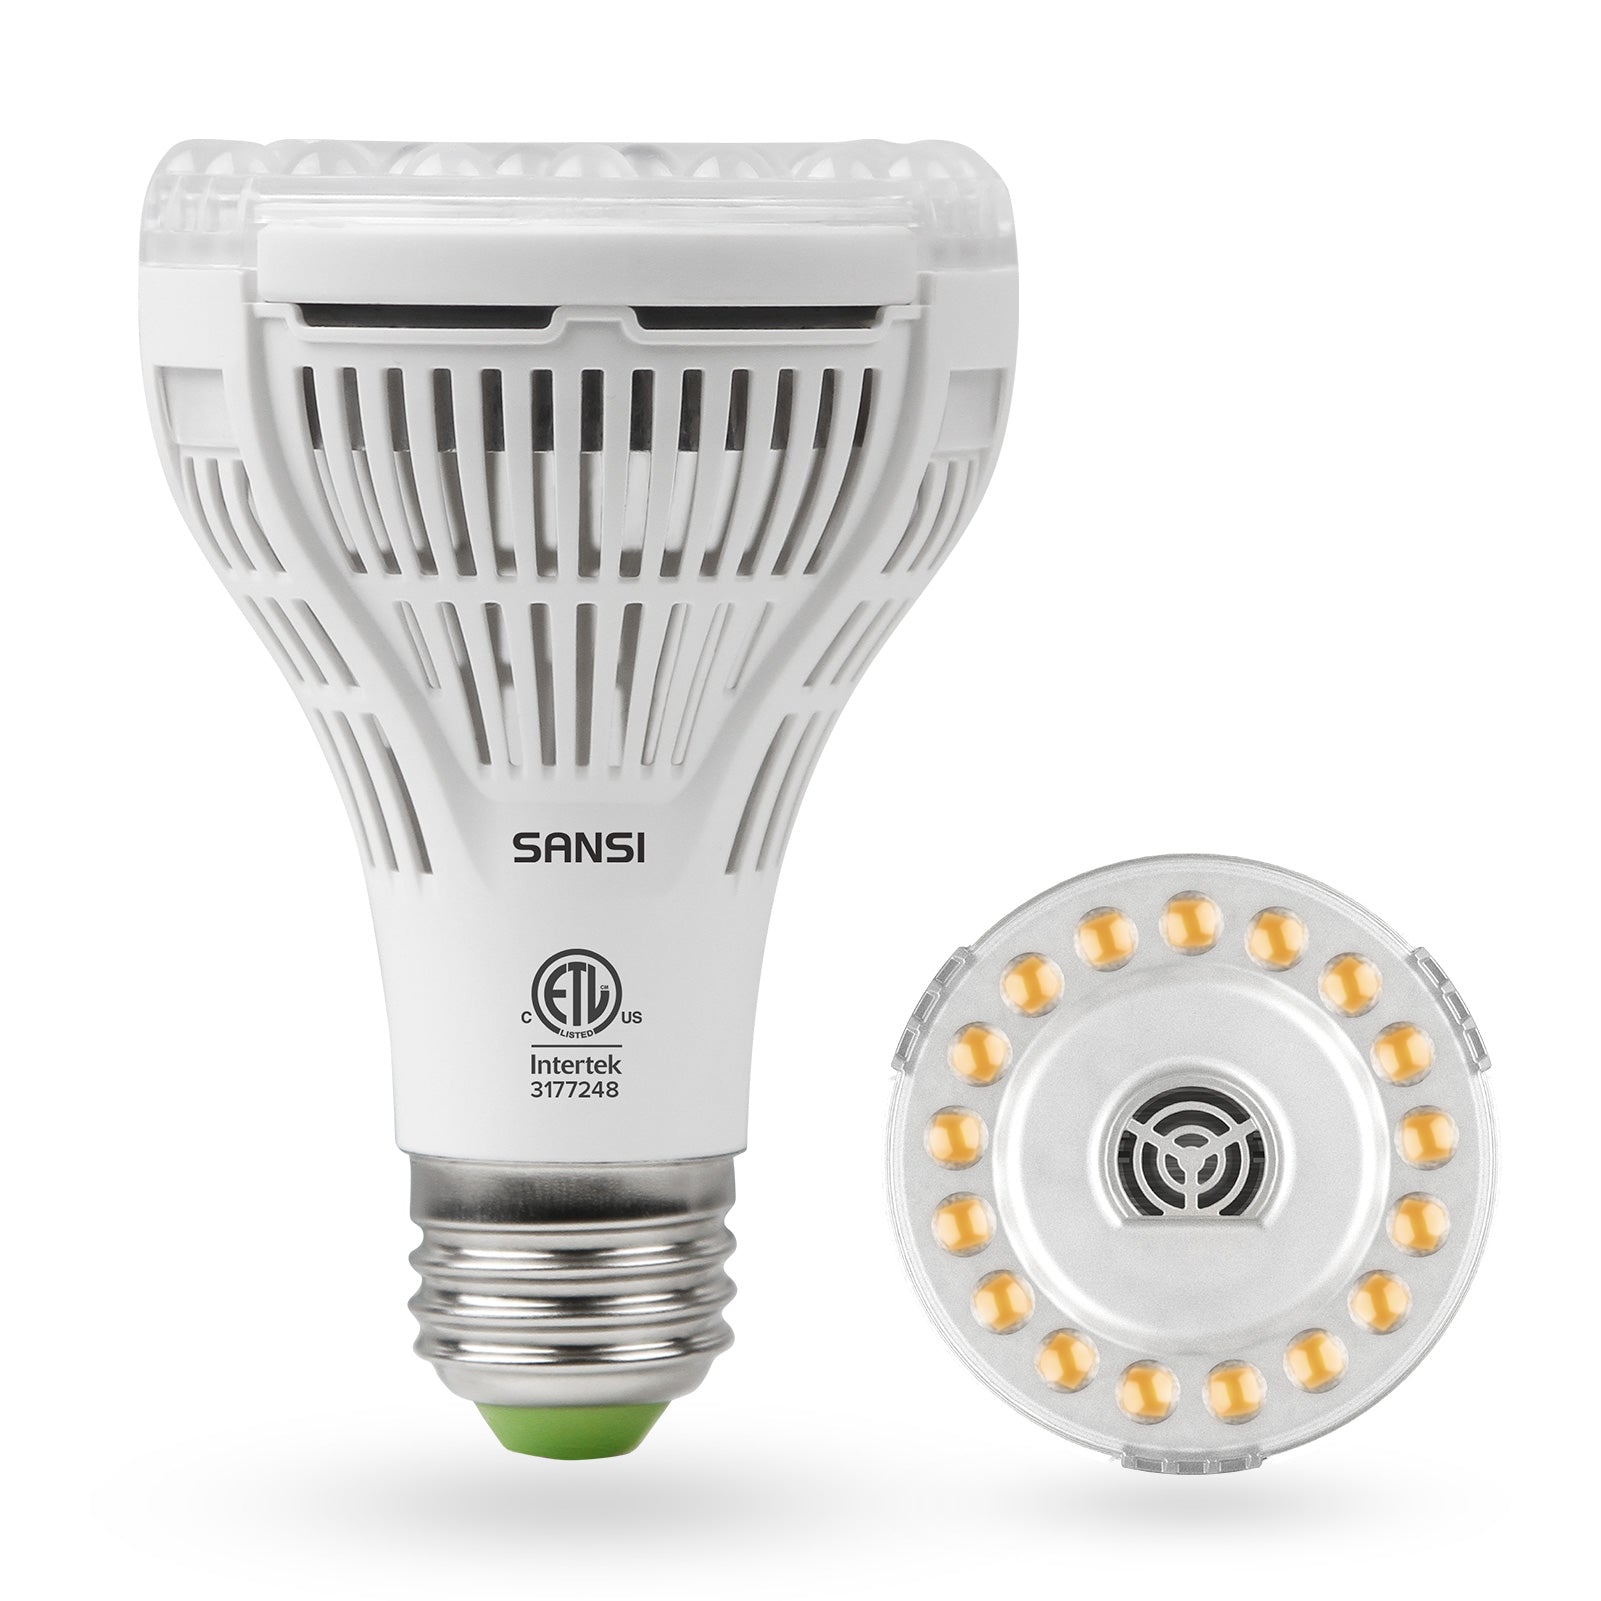 15W led grow light bulb, suitable for medium light indoor plants